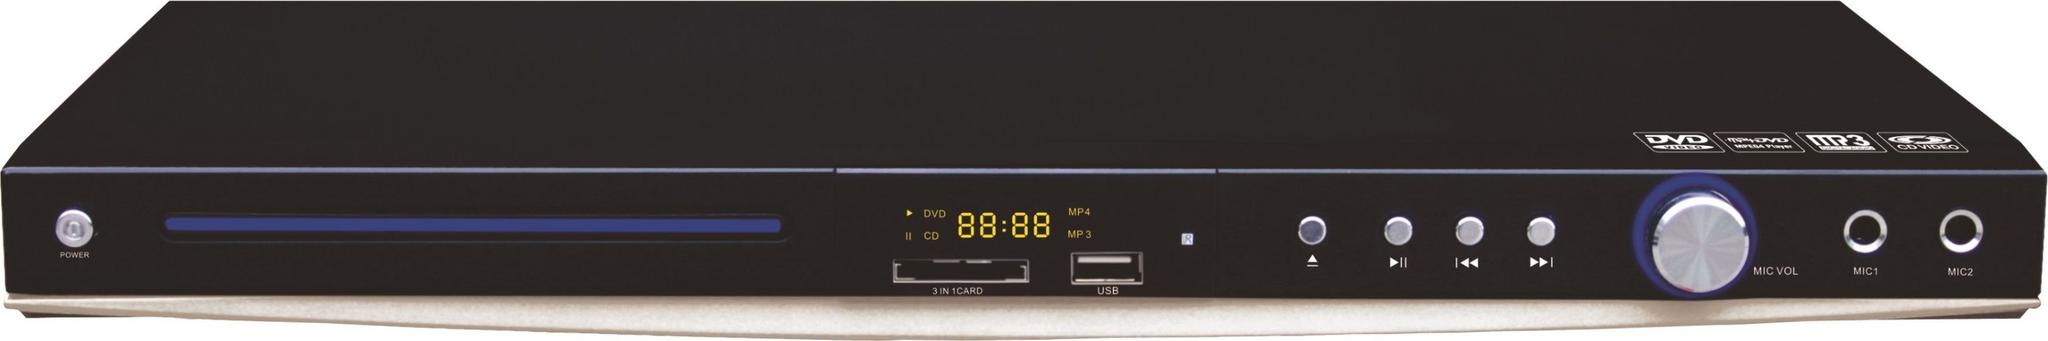 Wansa HDMI USB DVD Player (TKB399DVD)